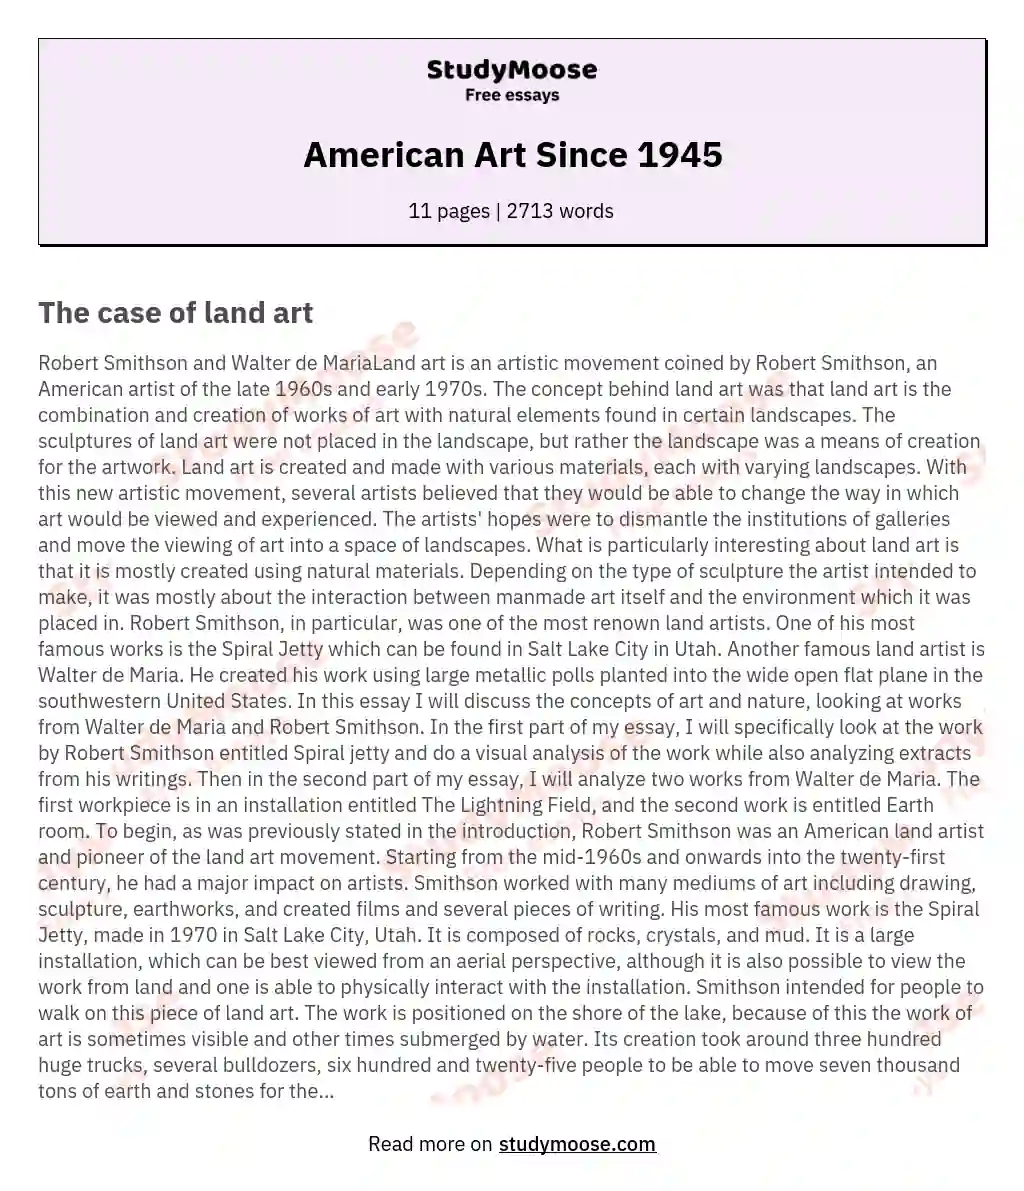 American Art Since 1945 essay